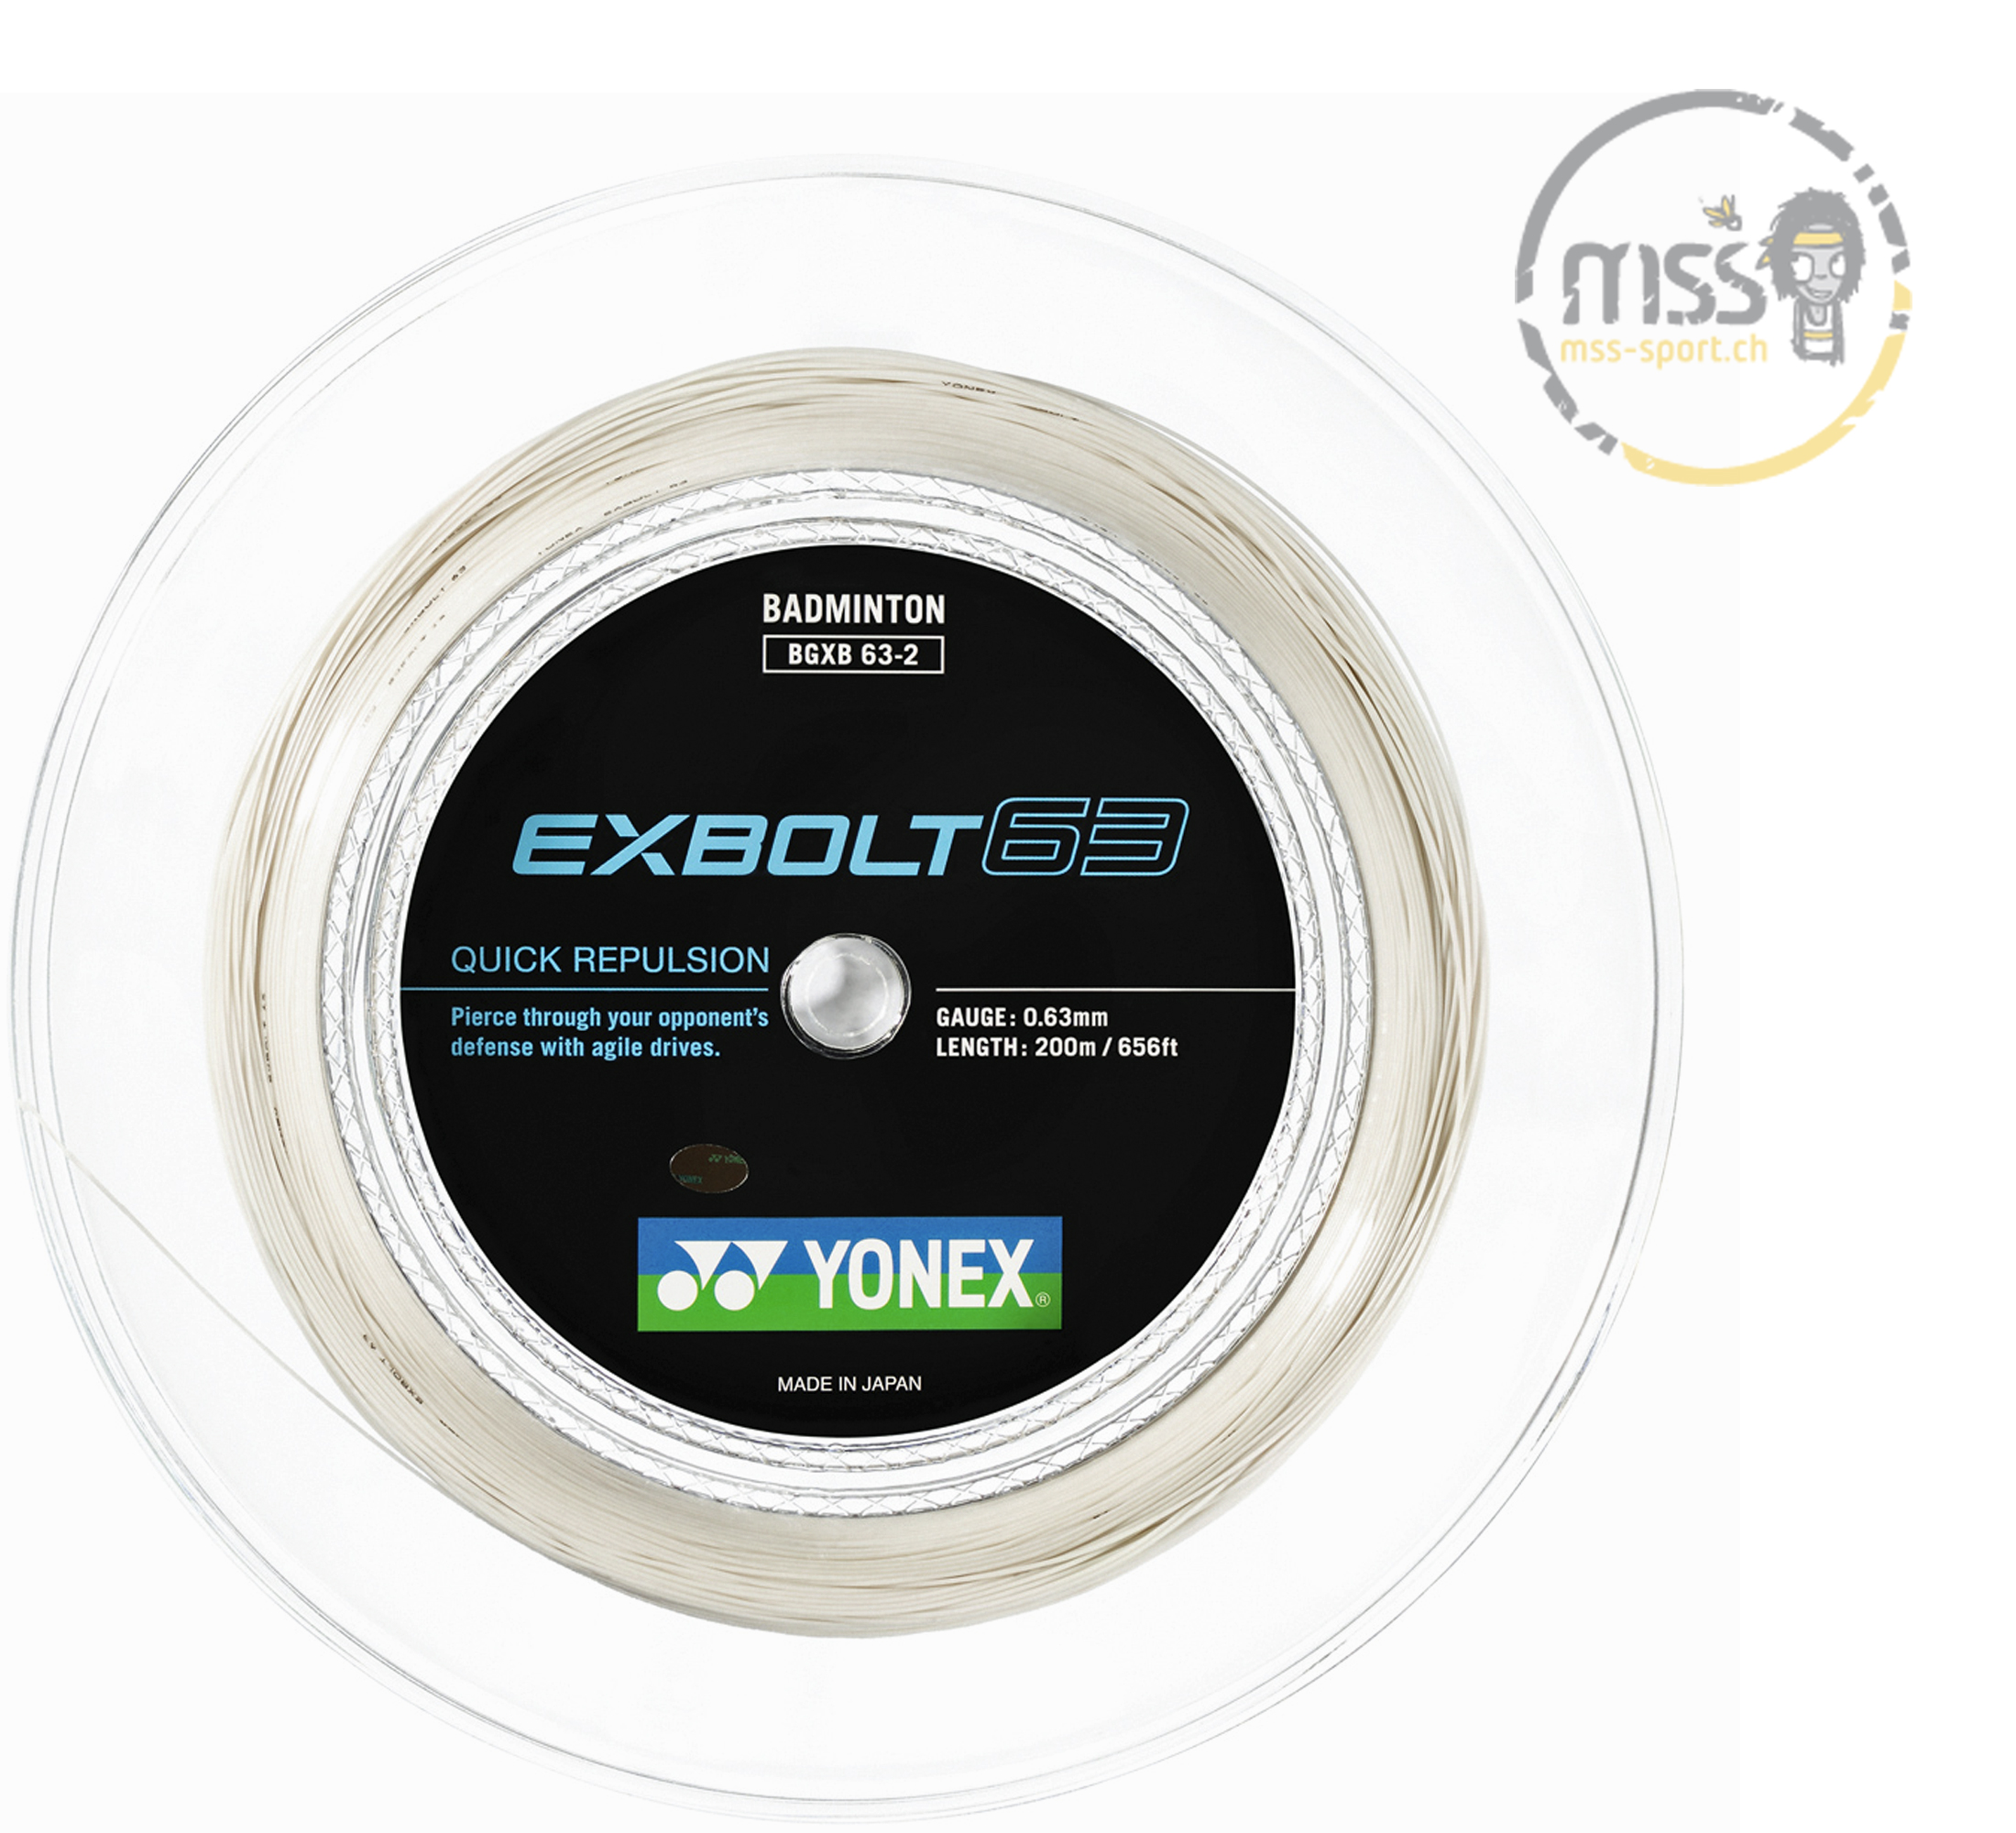 Yonex EXBOLT 63 white